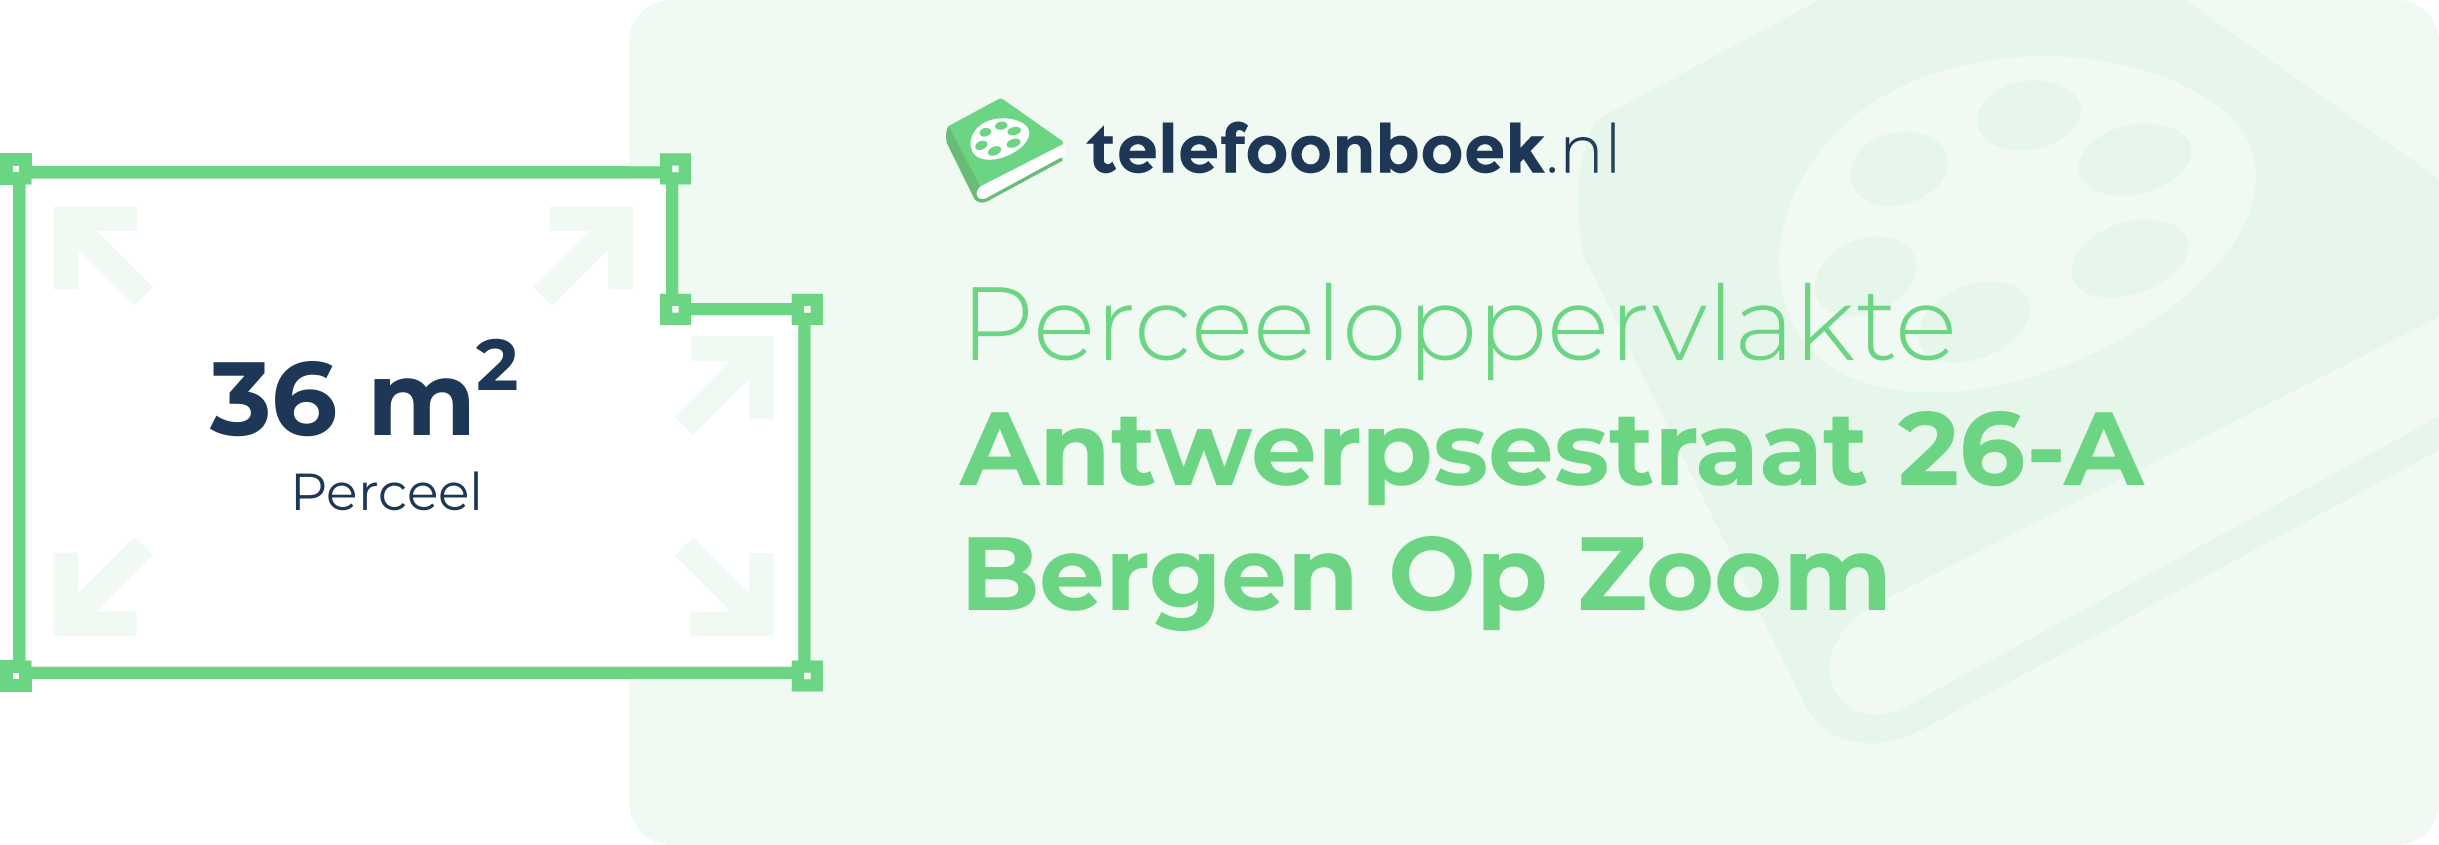 Perceeloppervlakte Antwerpsestraat 26-A Bergen Op Zoom